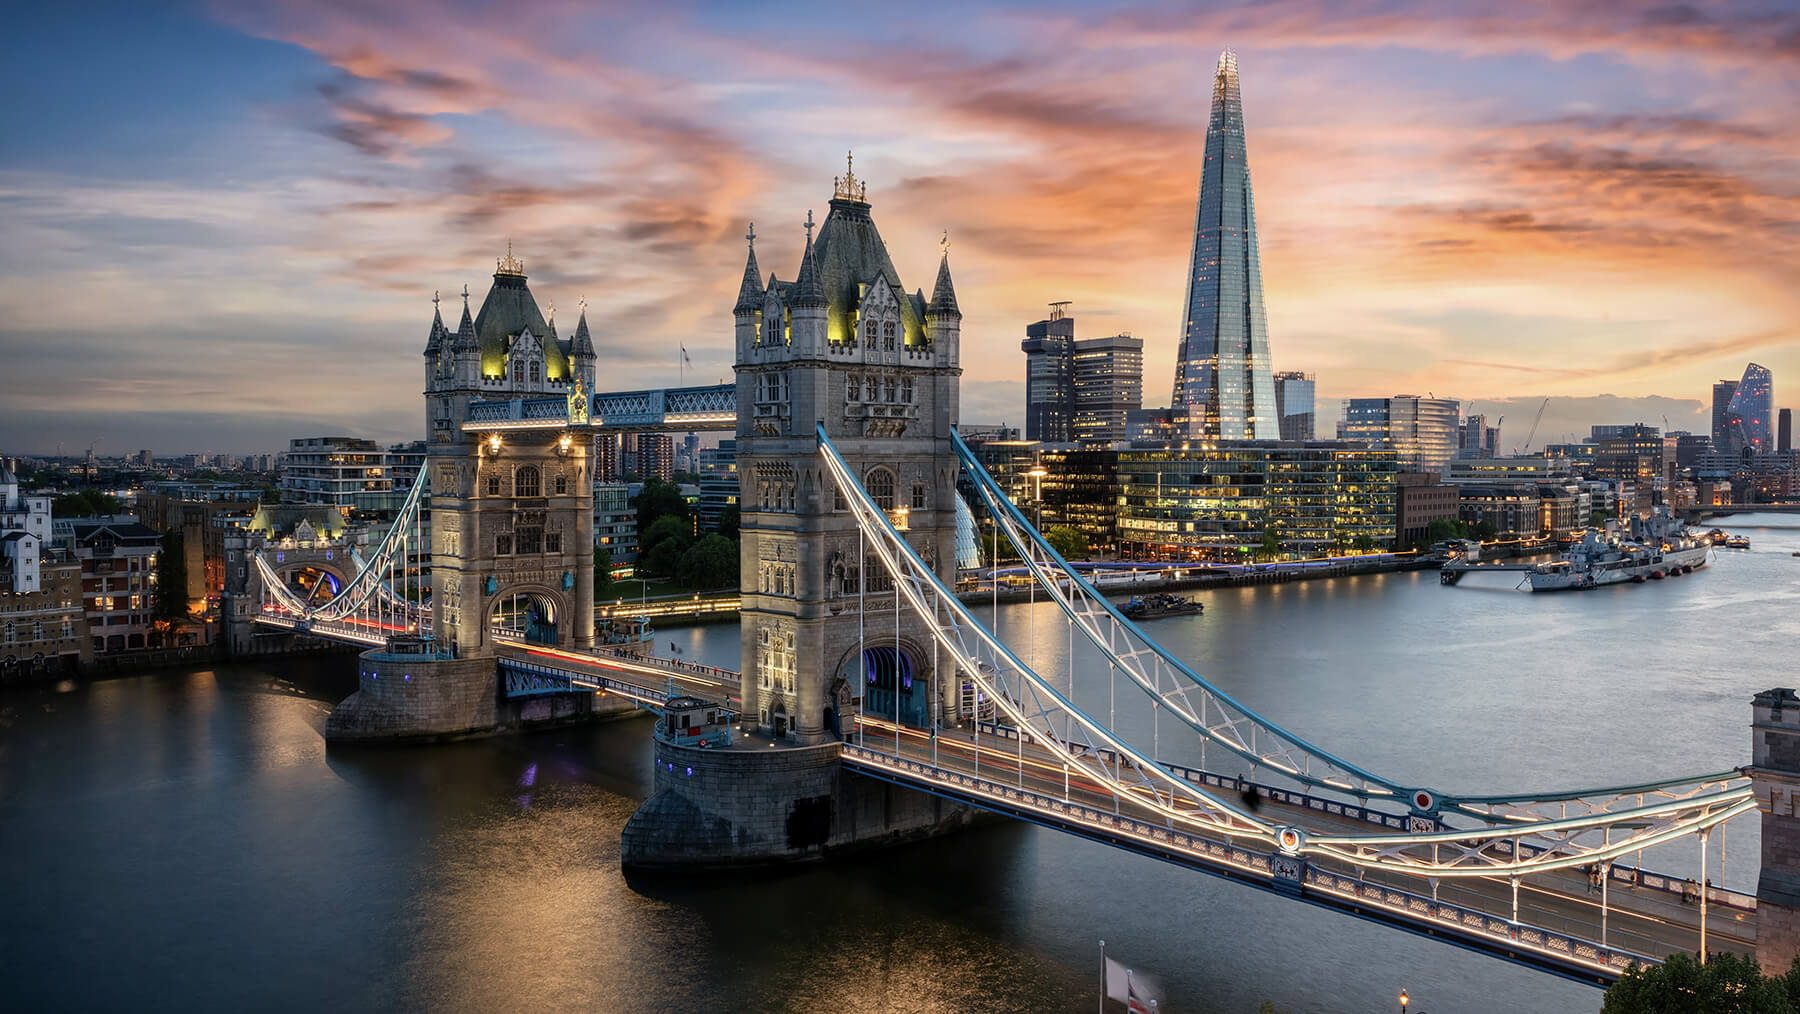 Tower Bridge and surrounding cityscape in London, United Kingdom